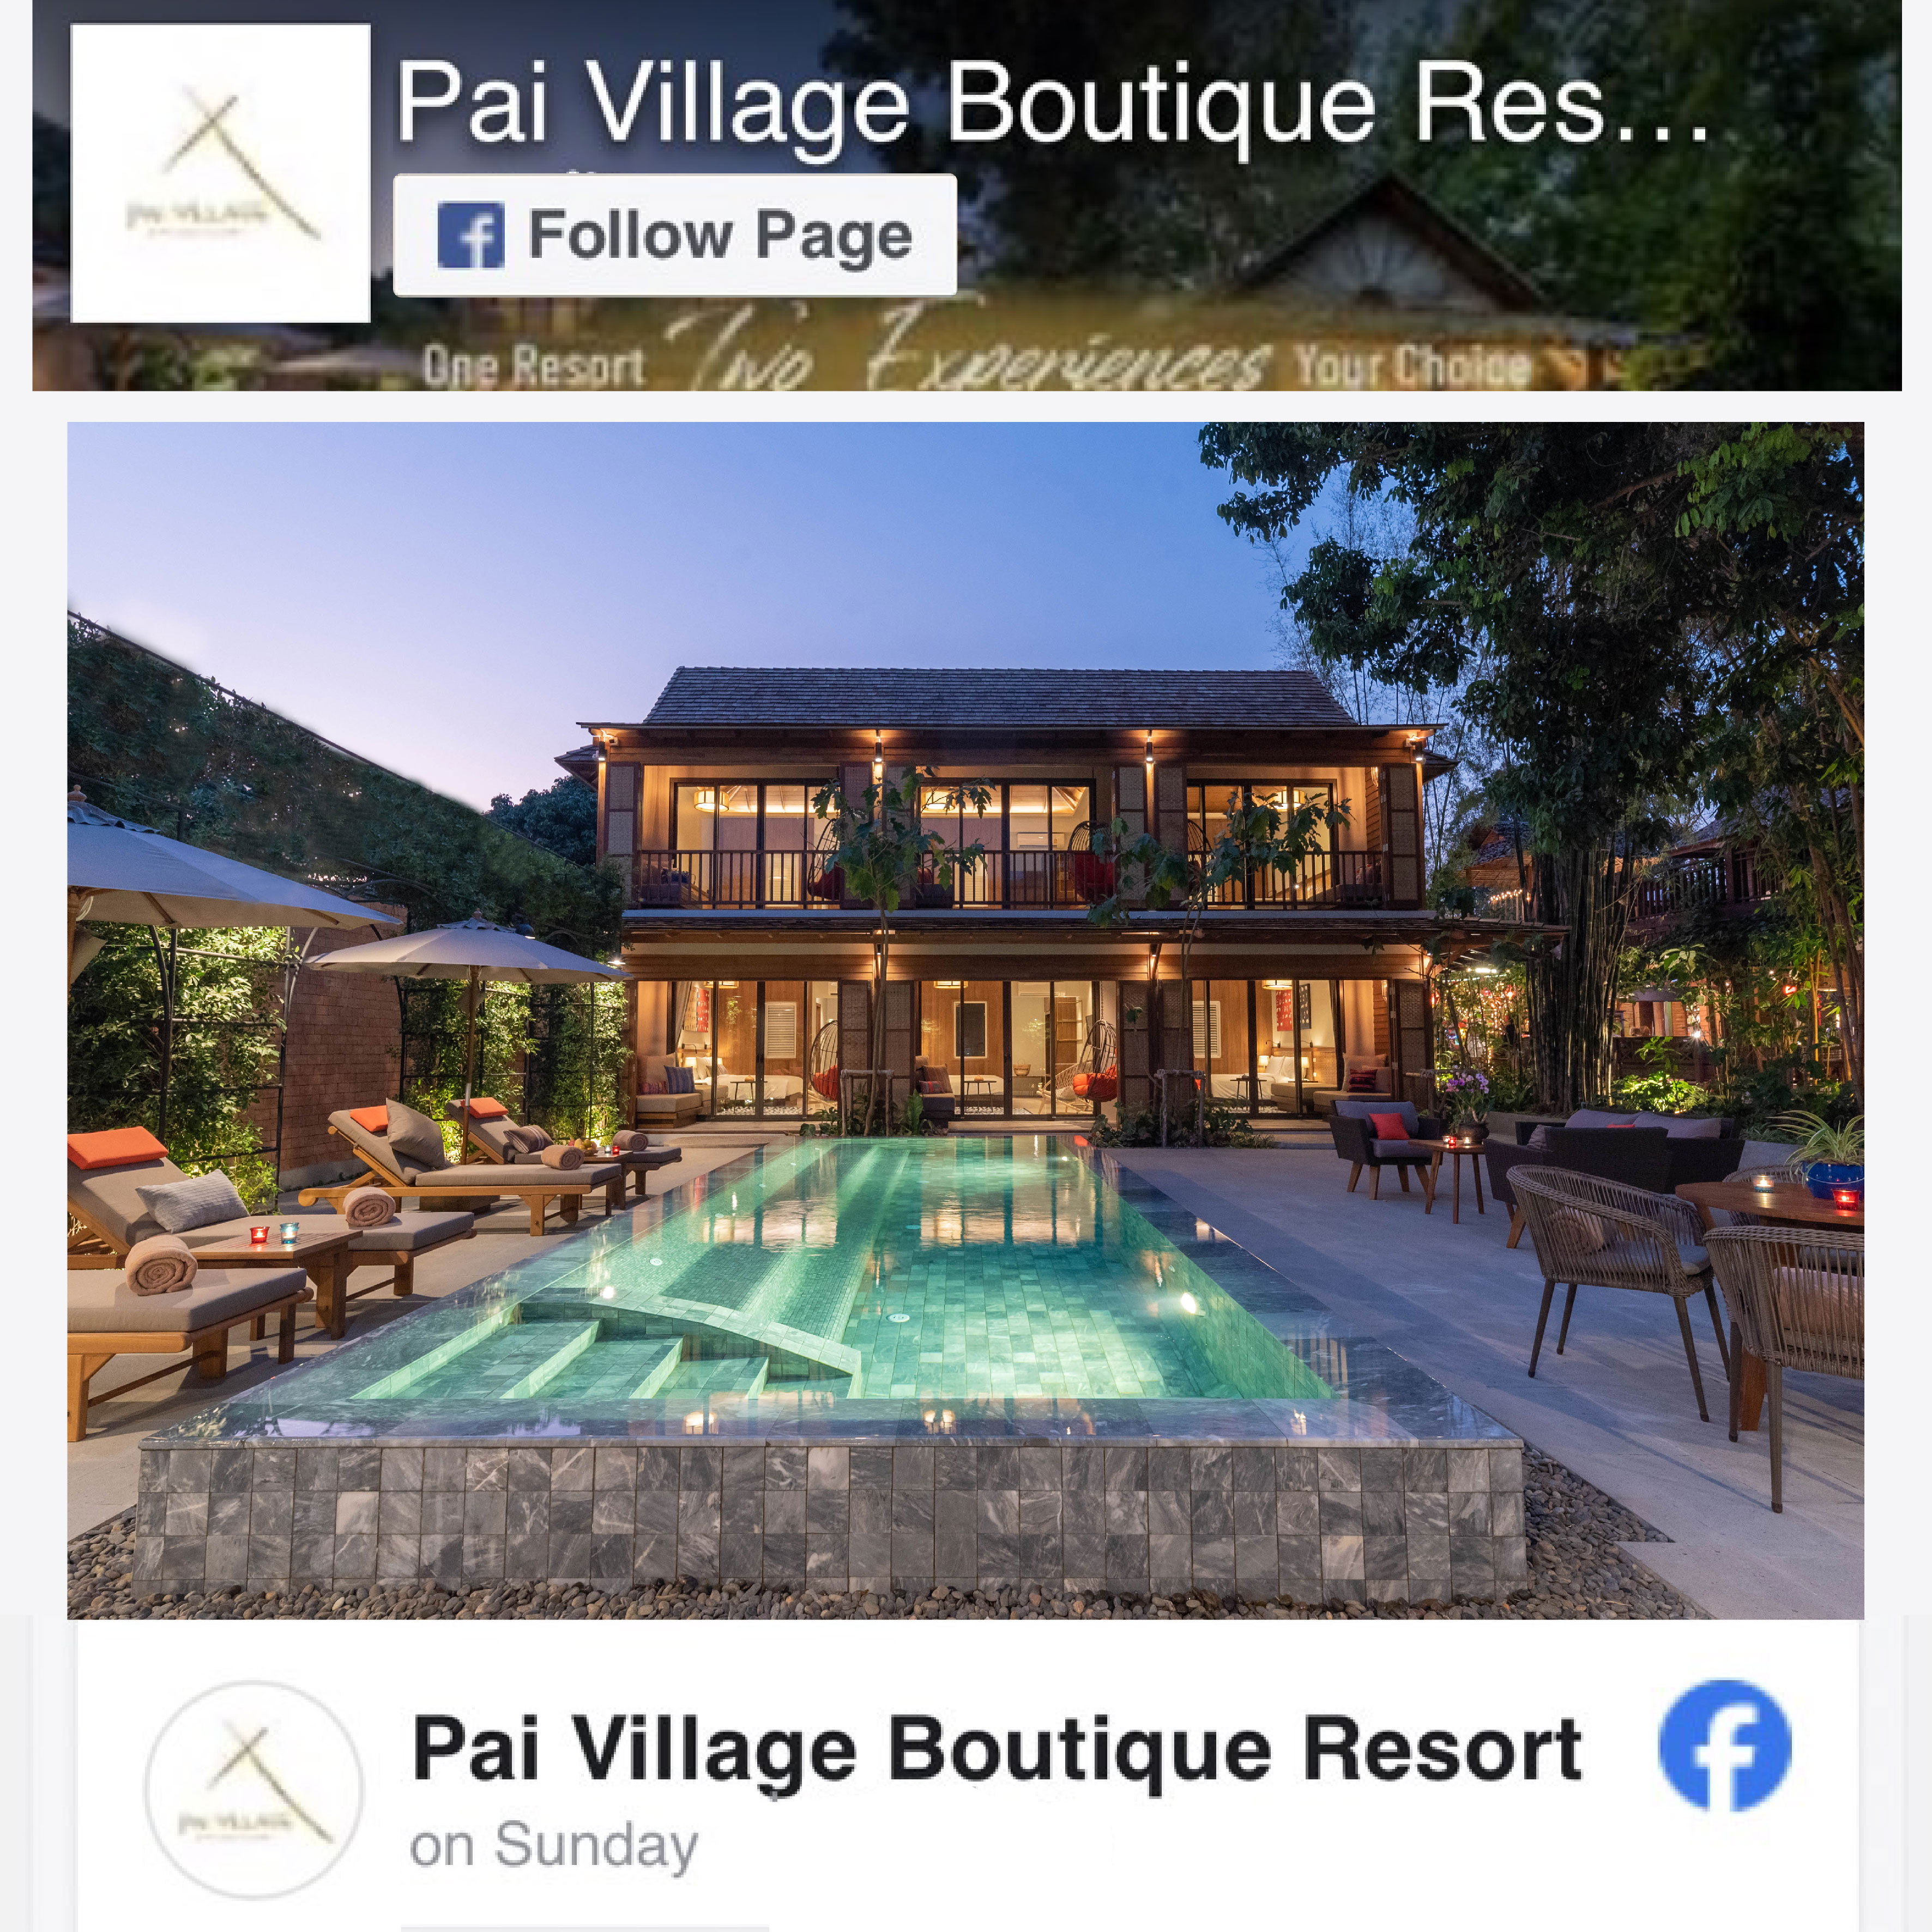 Pai Village Facebook